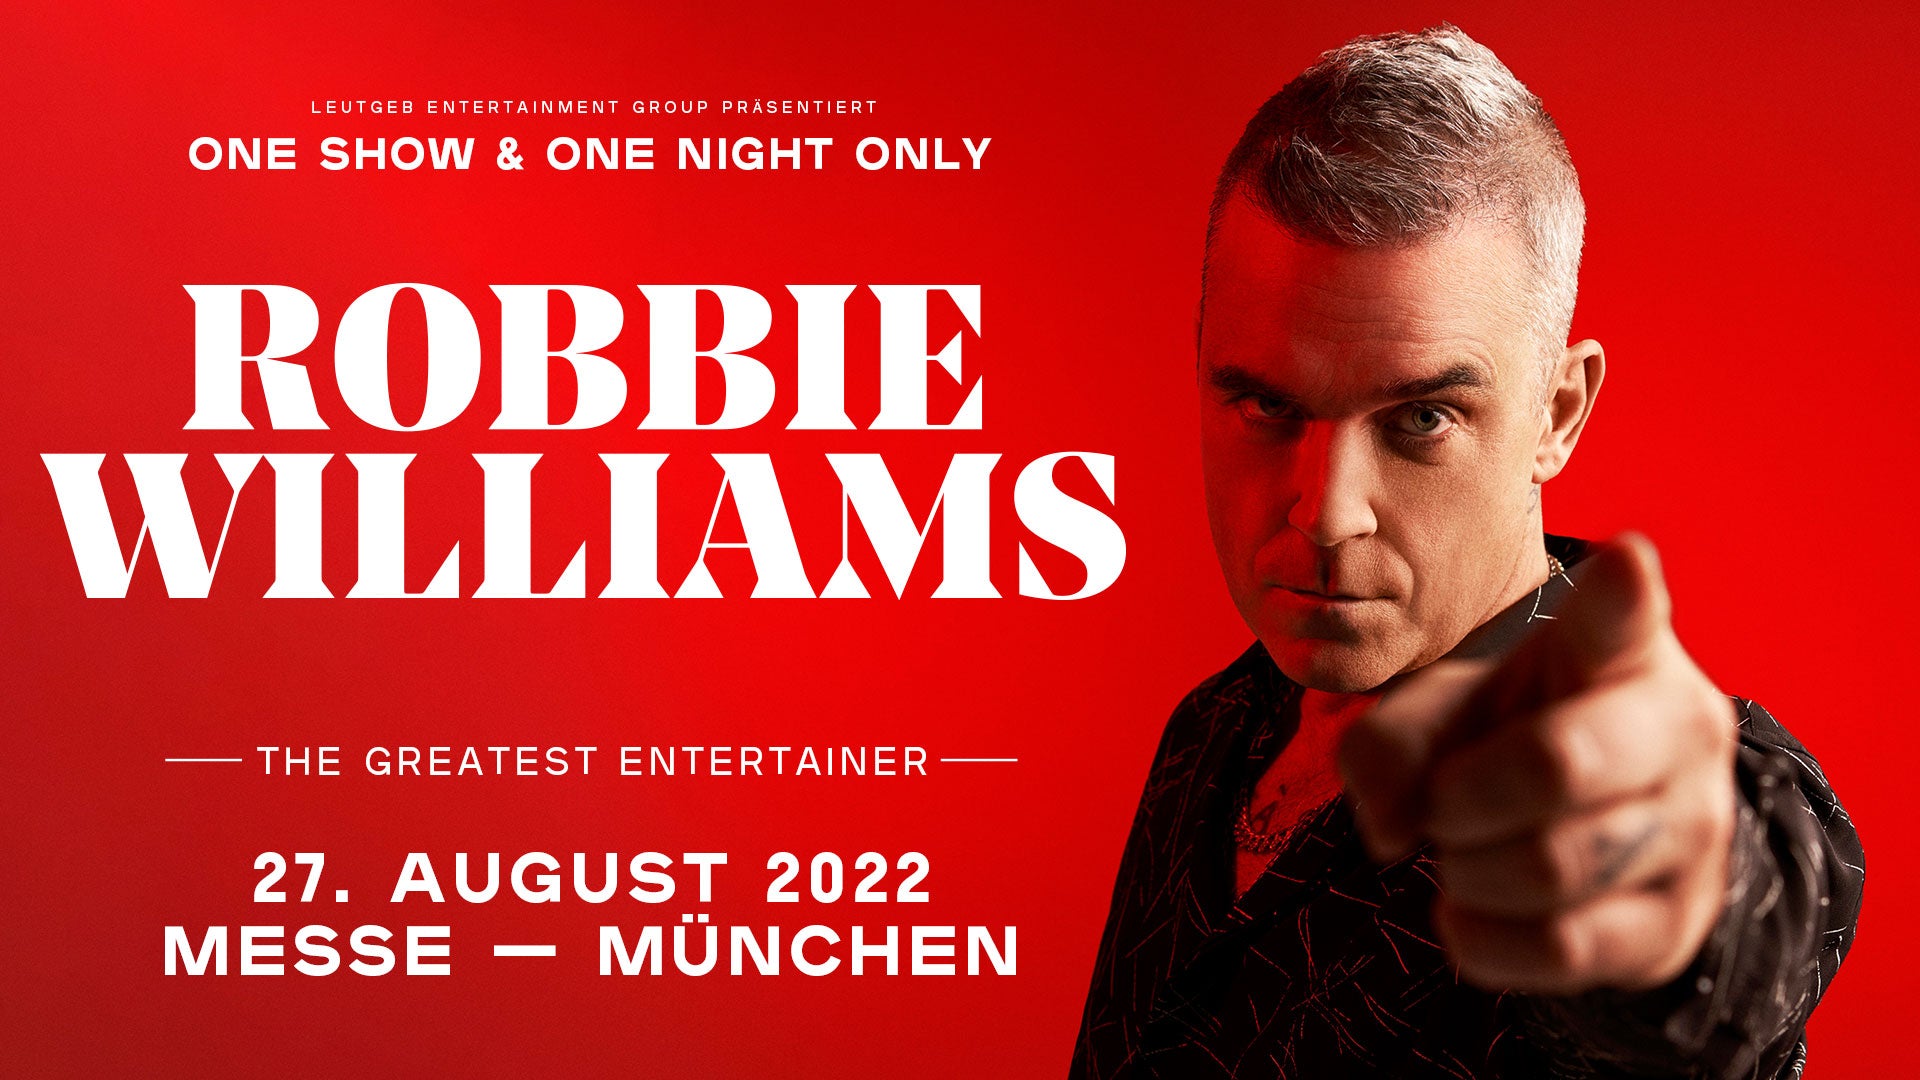 Robbie announces huge show in Munich - August 2022